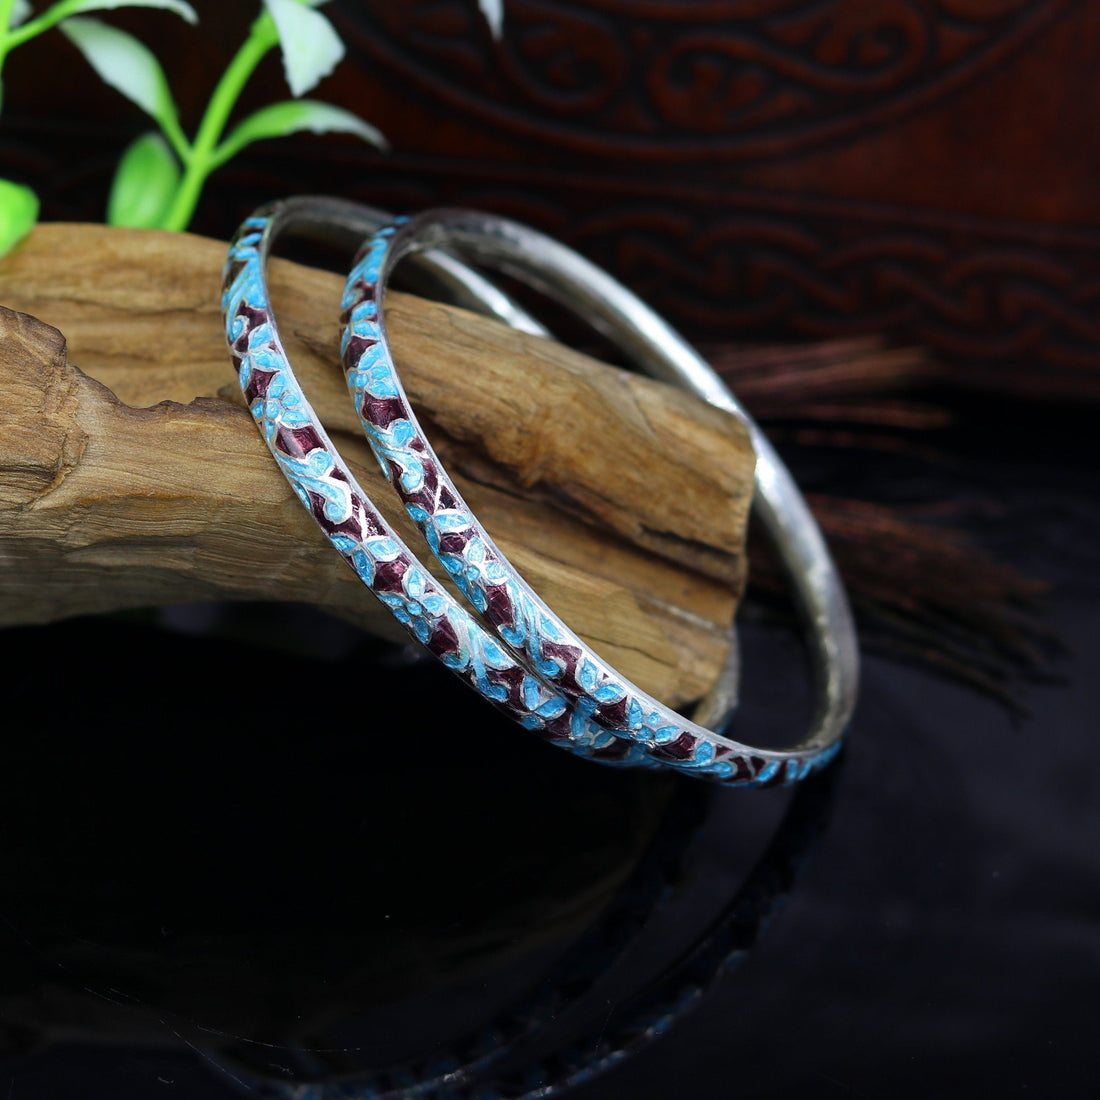 Customized pretty enamel work solid 925 sterling silver bangles kada bracelet for girl's stylish brides tribal jewelry Rajasthan nba110 - TRIBAL ORNAMENTS